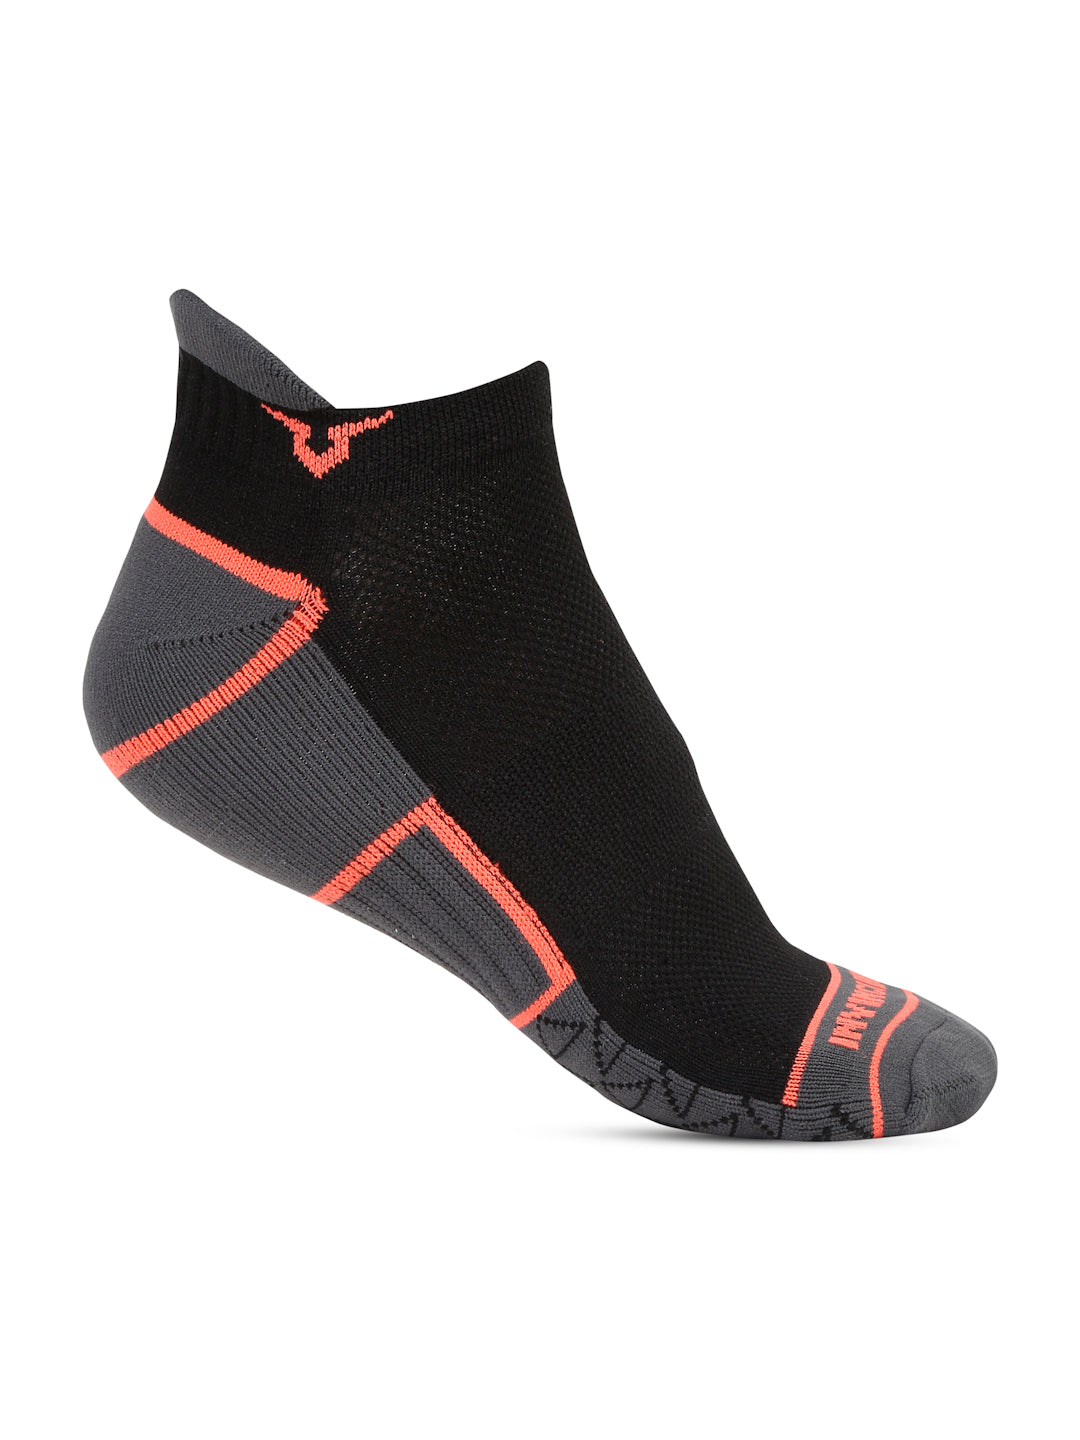 Invincible Set of 3 Ankle Length Socks